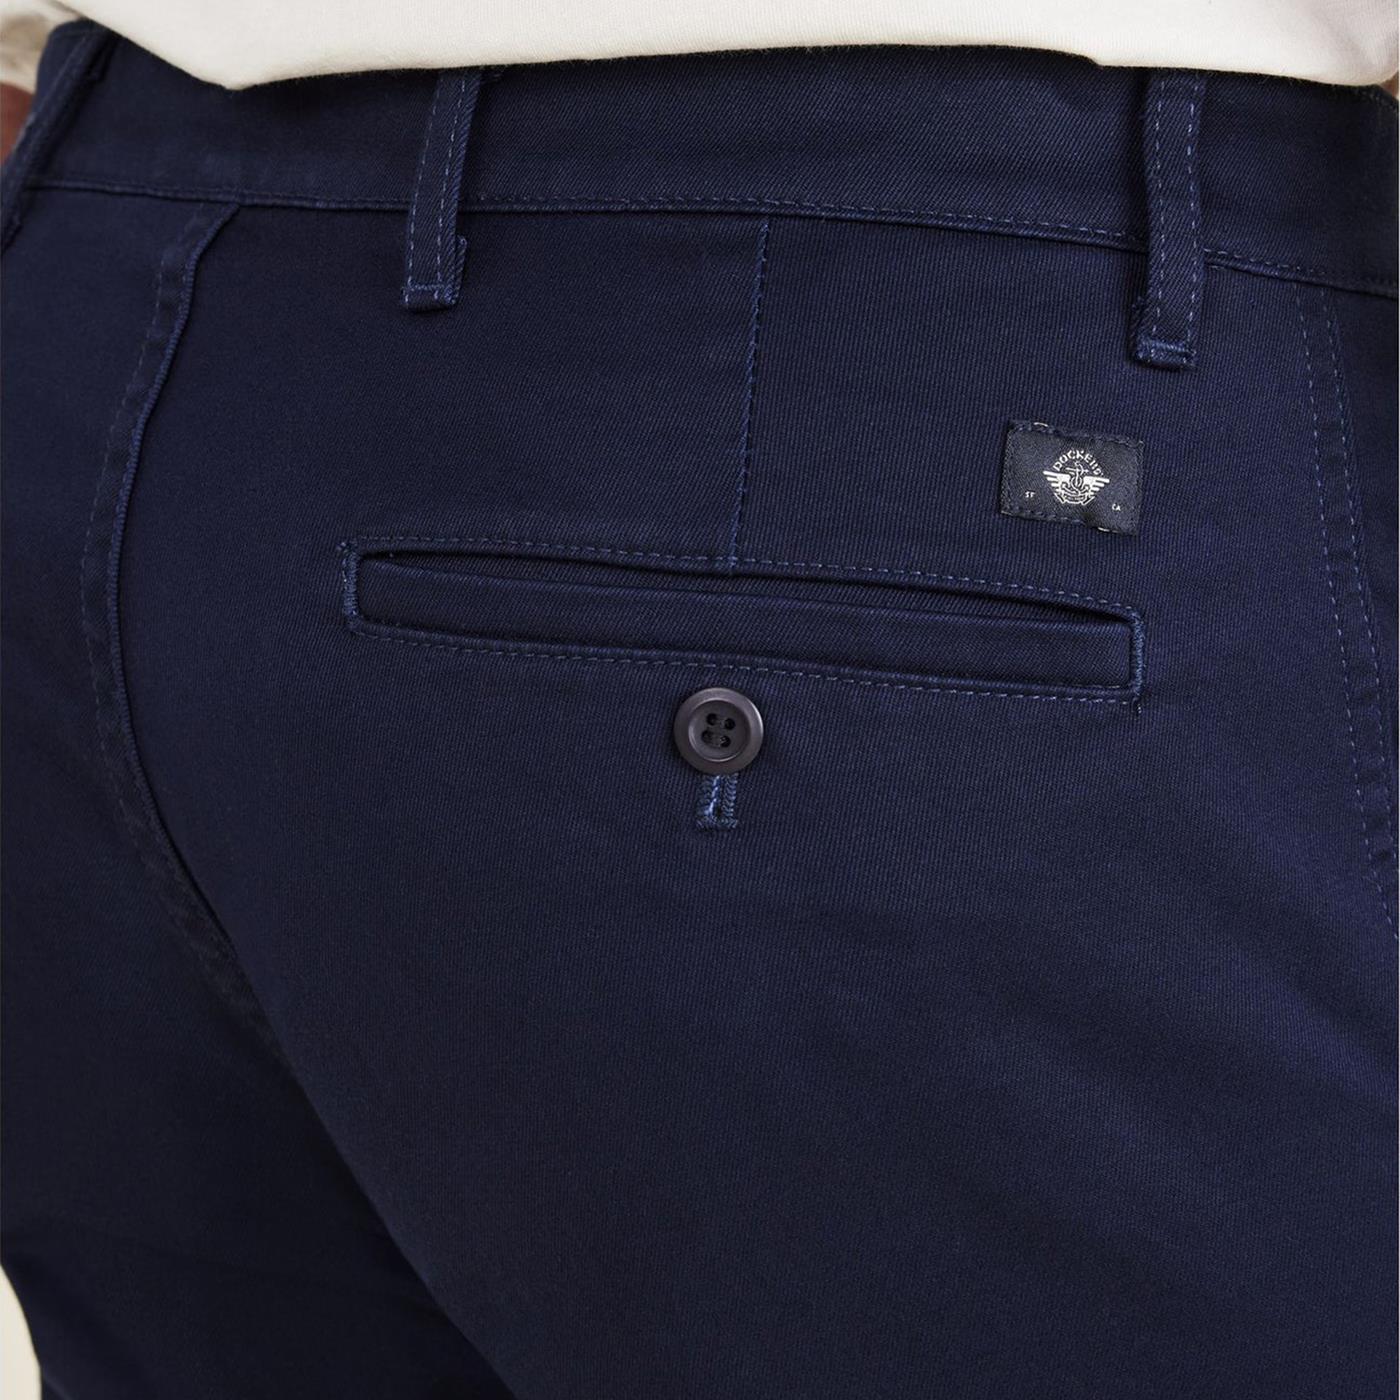 Pants Dockers Original Chino Opp Slim Blue for Man | A4862-0001 | XTREME.PT